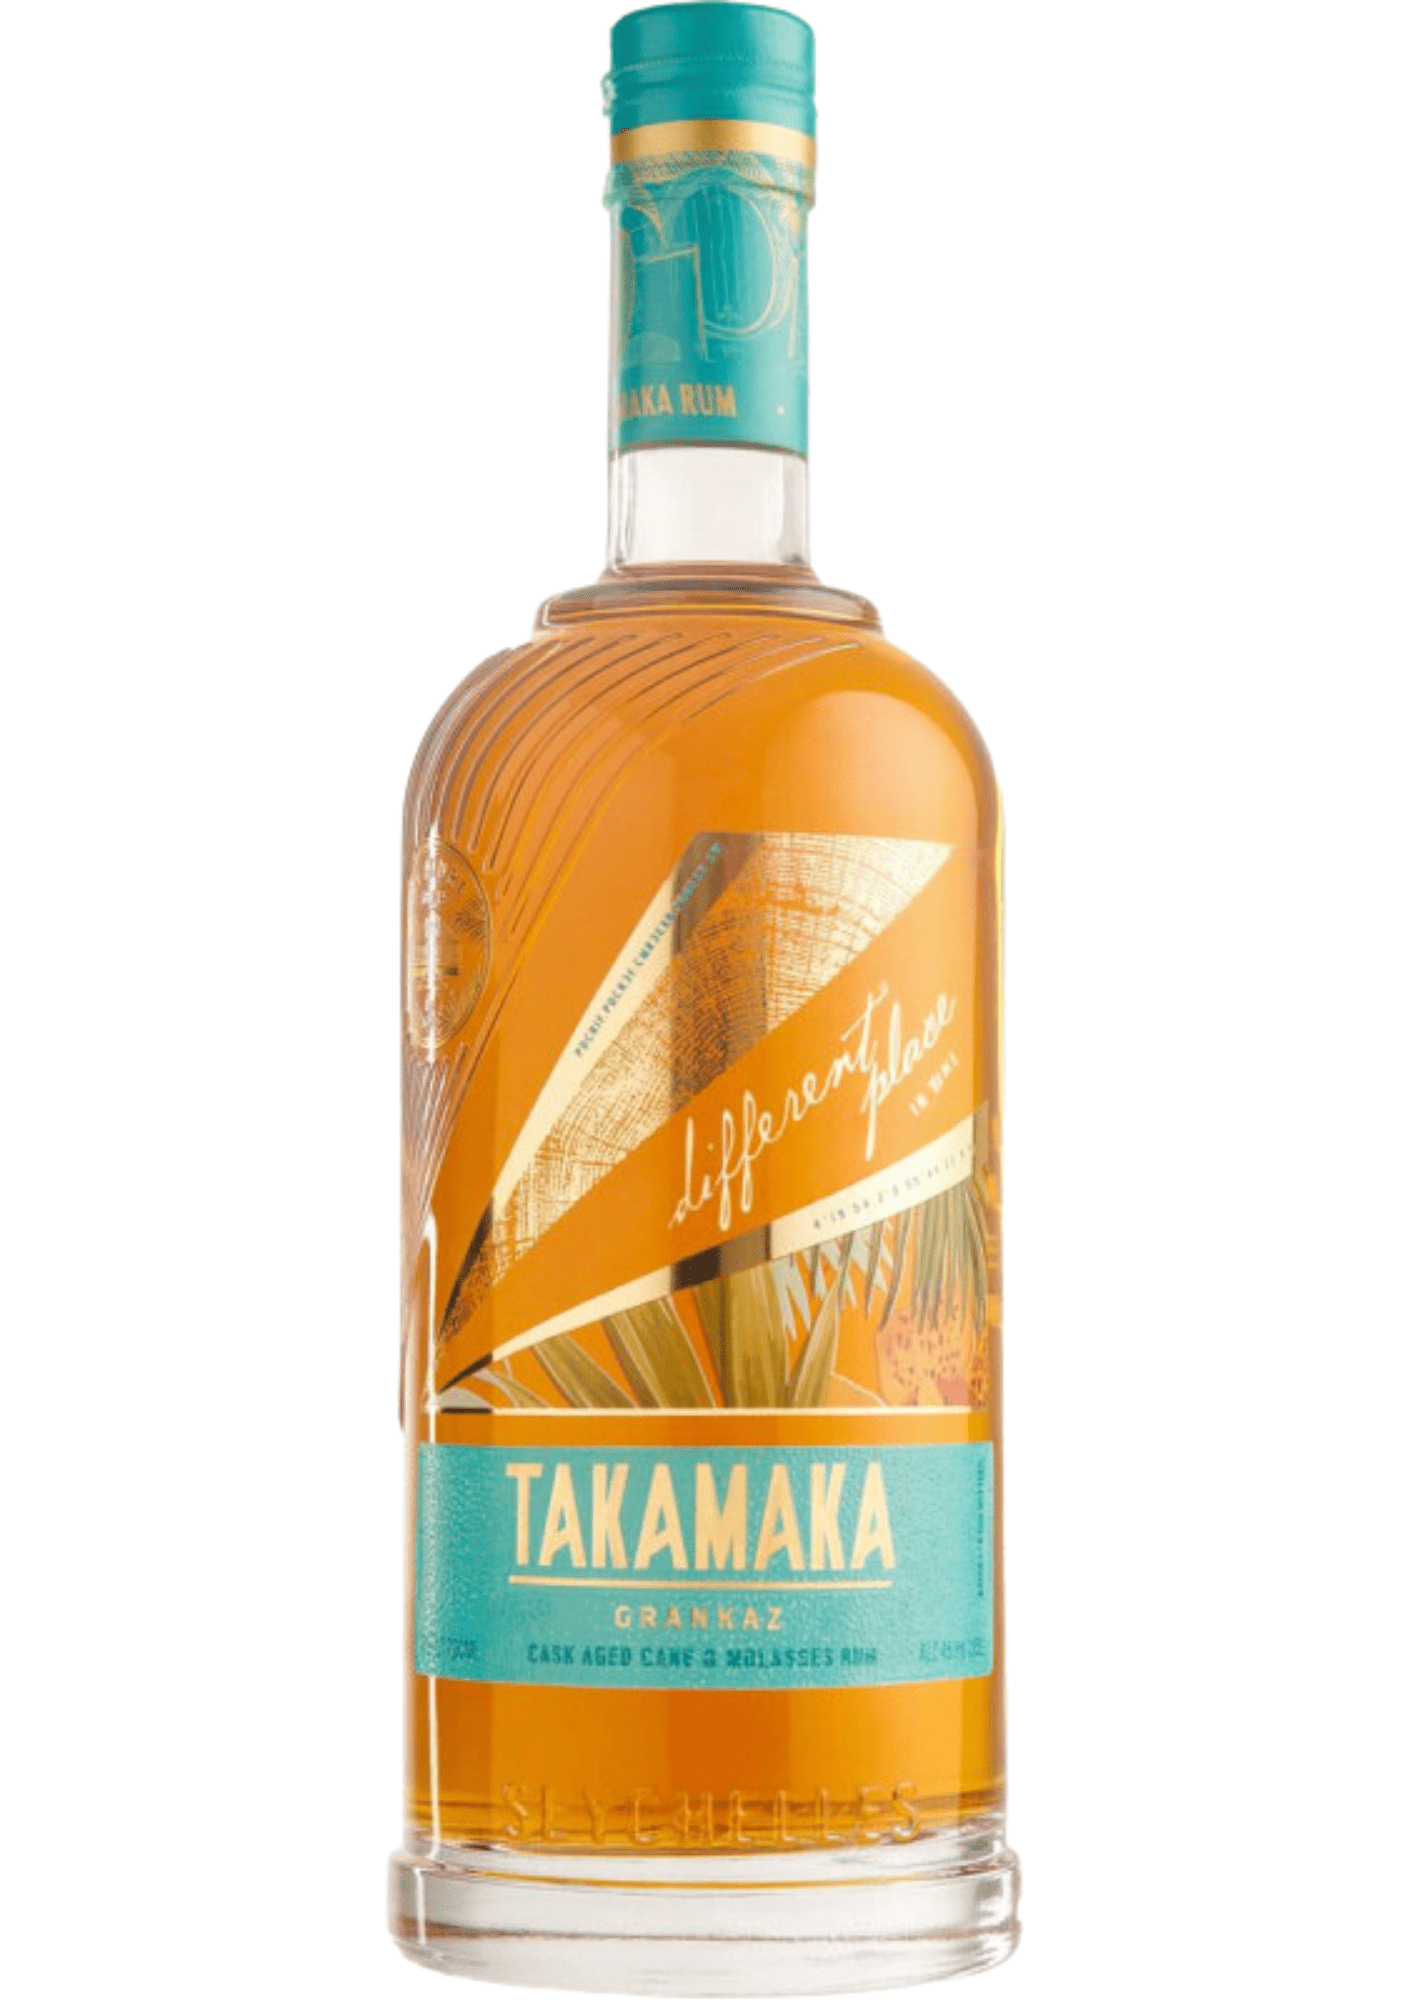 Takamaka St. Andre Grankaz 45,1% 0,7l